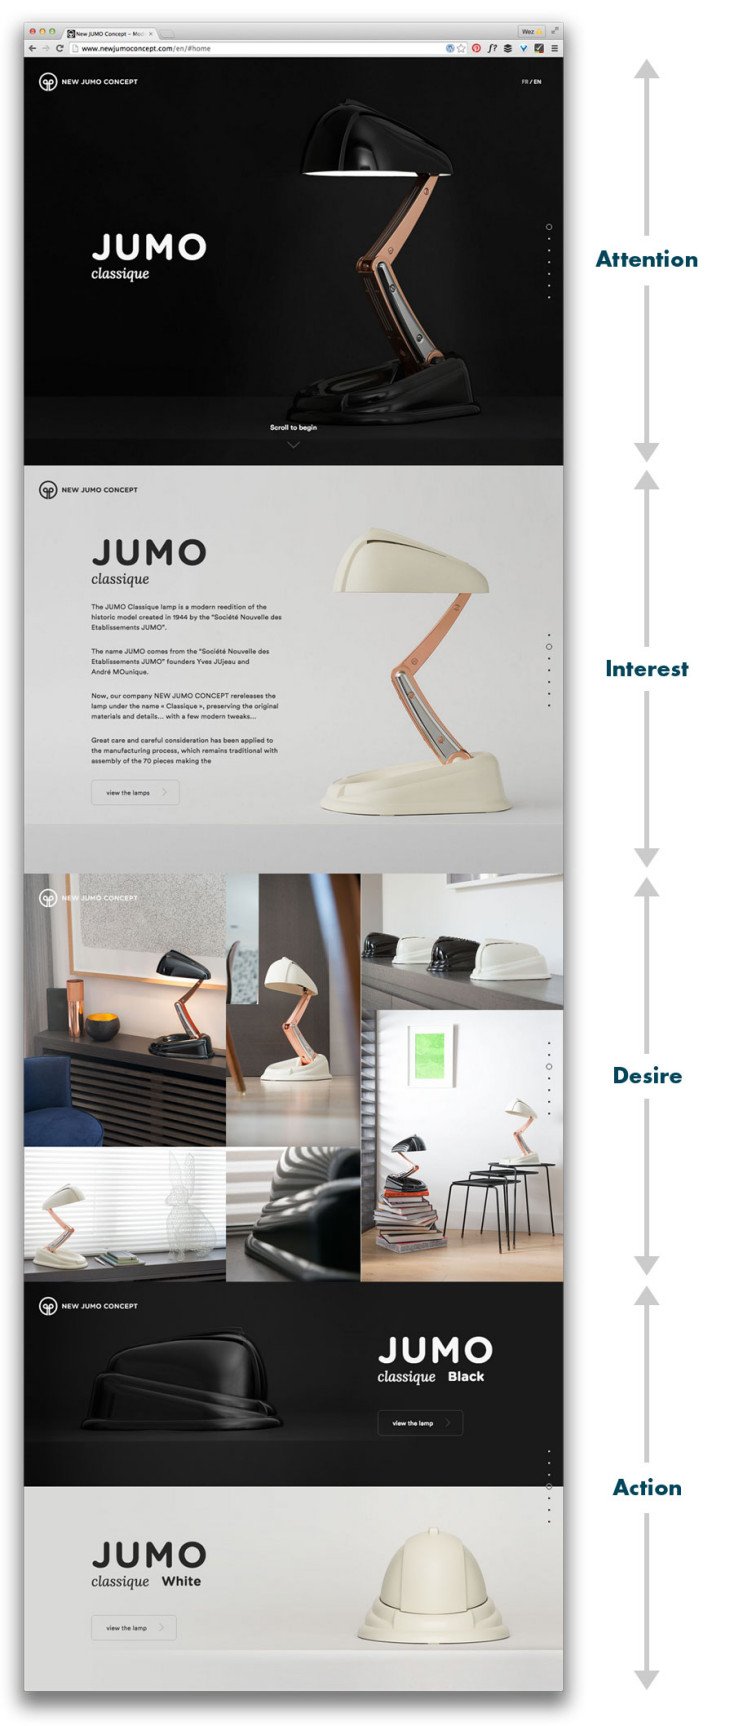 Jumo home page